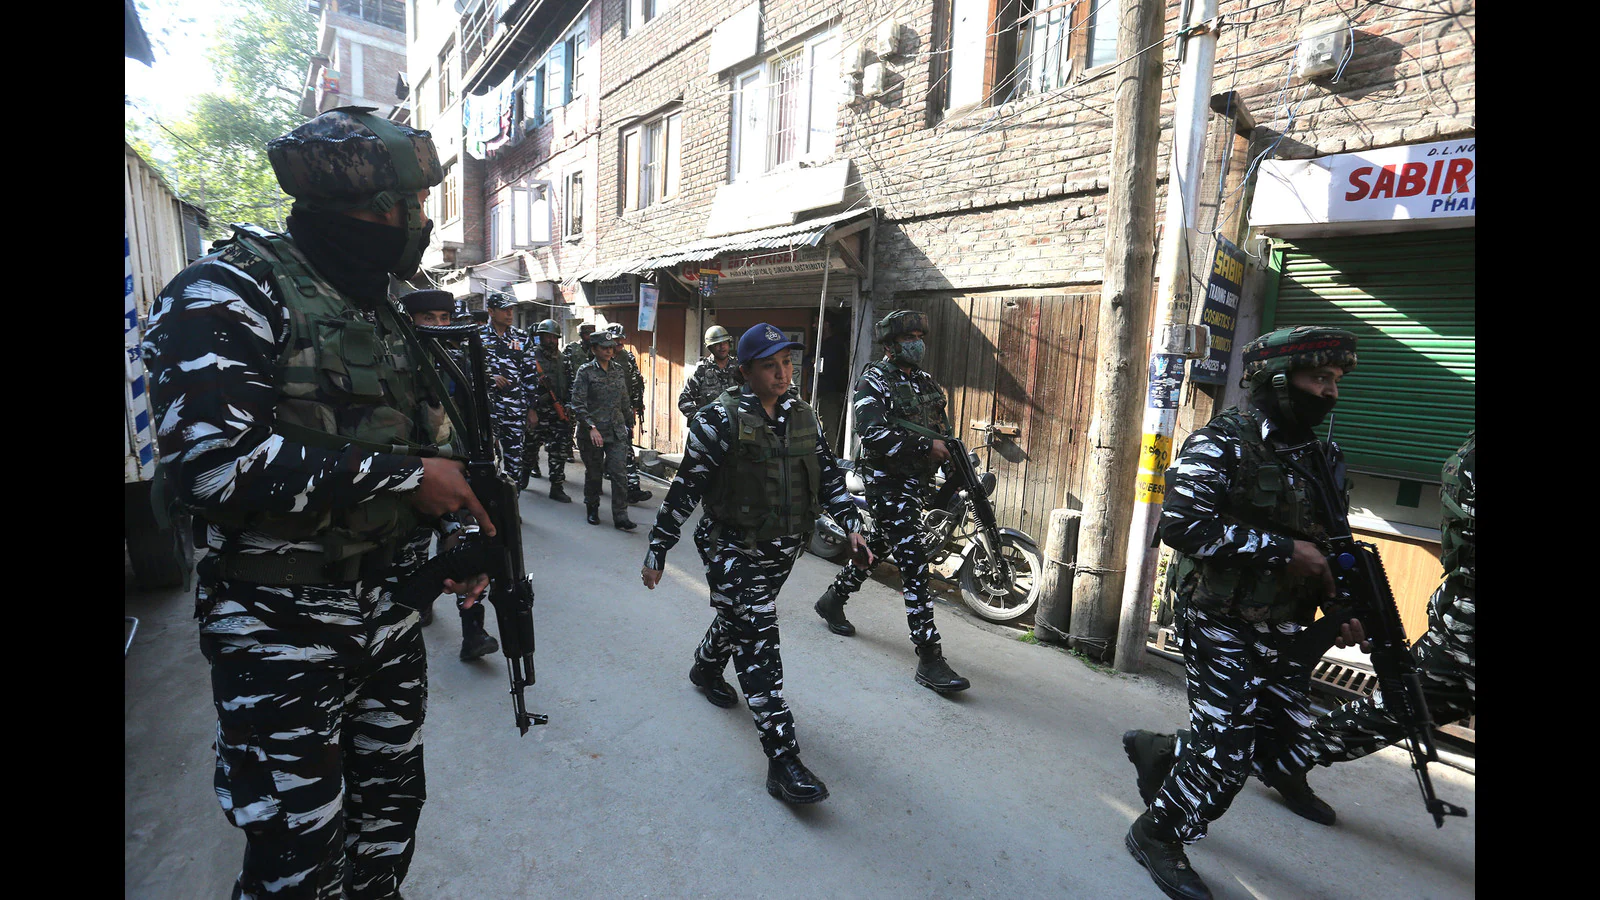 Kashmir attacks: Bridge security gaps